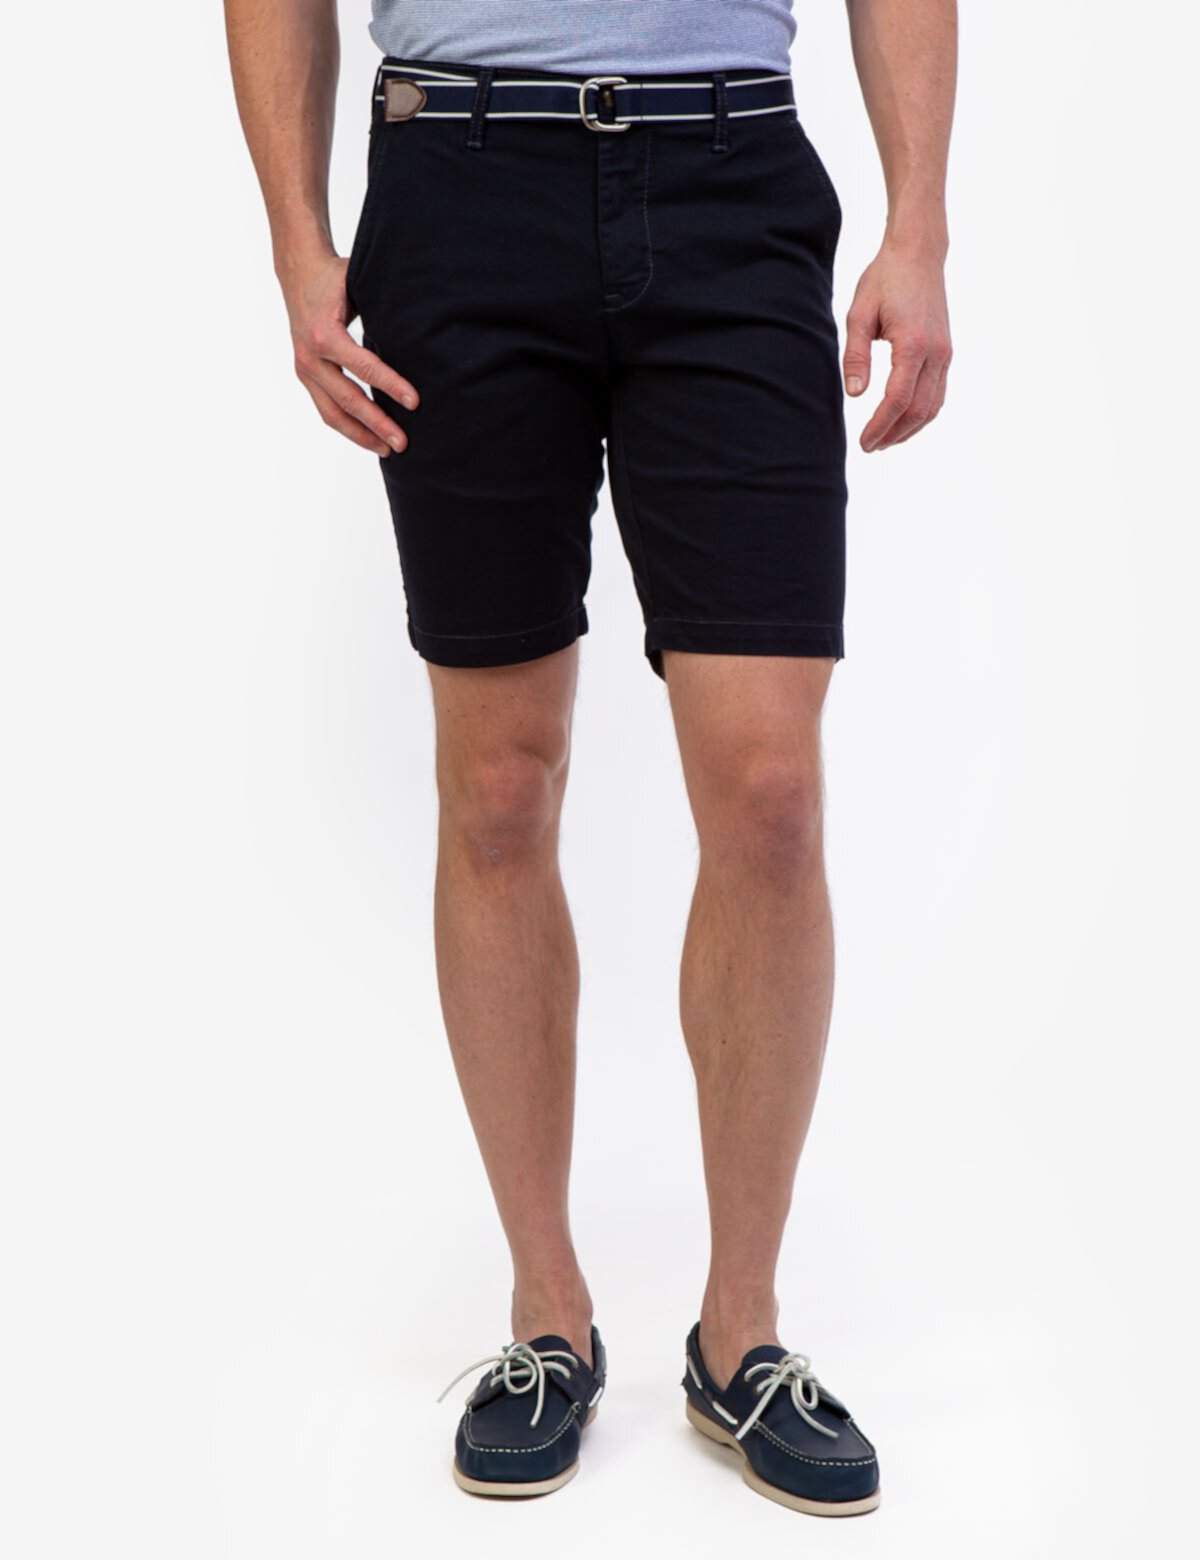  Короткие штаны с ремнем HARTFORD U.S. POLO ASSN. для мужчин U.S. POLO ASSN.